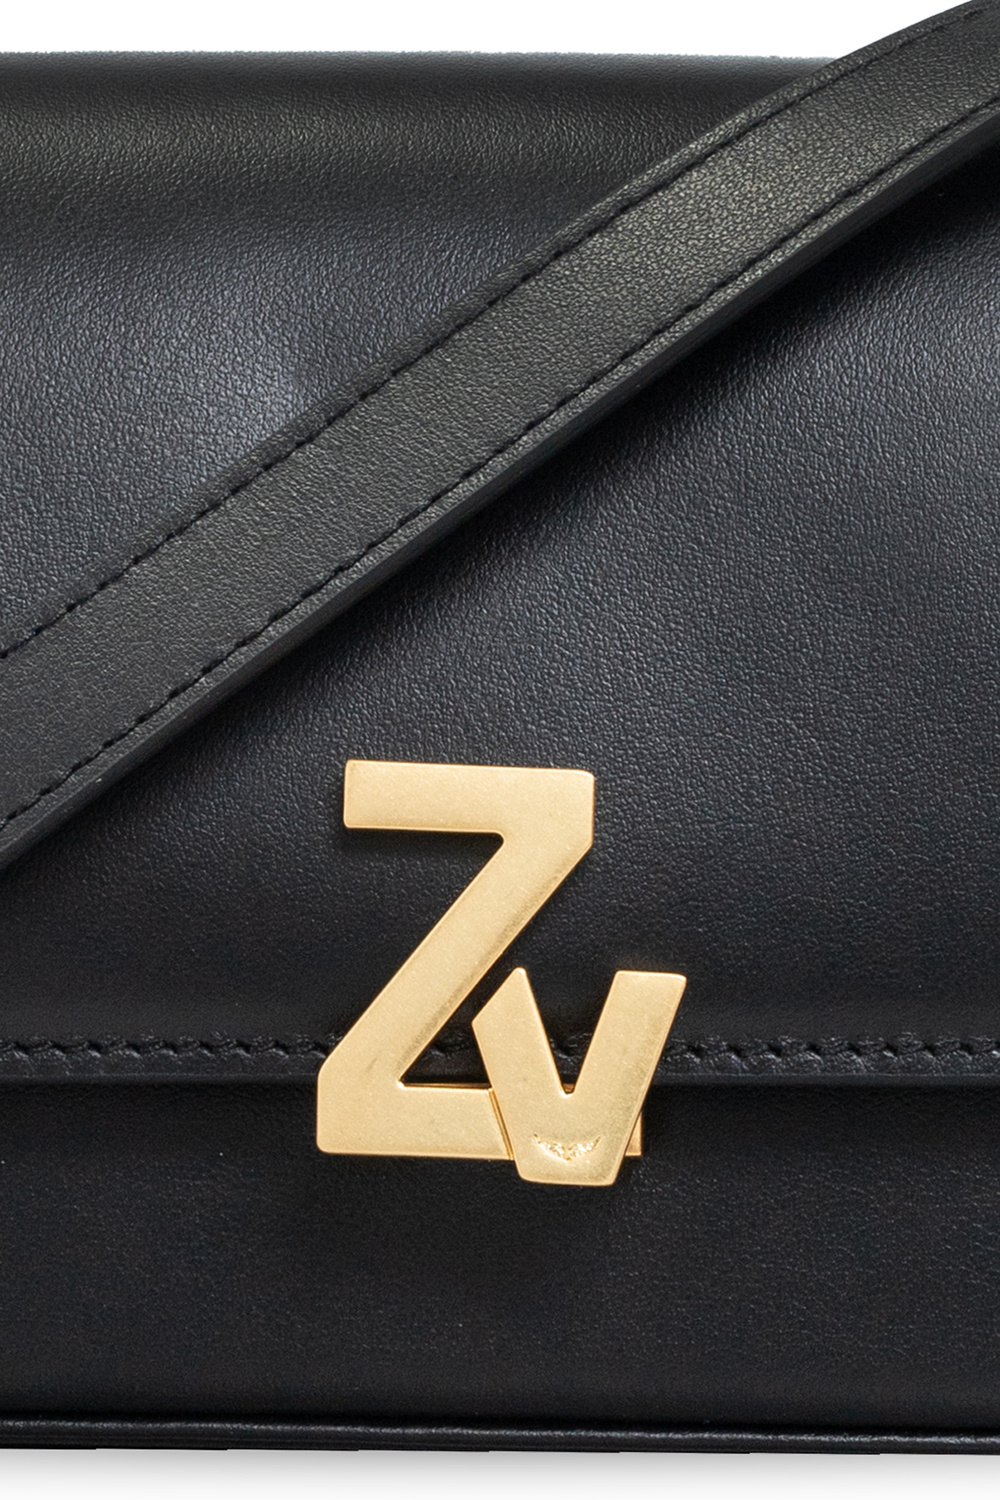 Zadig & Voltaire bottega veneta intrecciato shearling tote bucket bag item